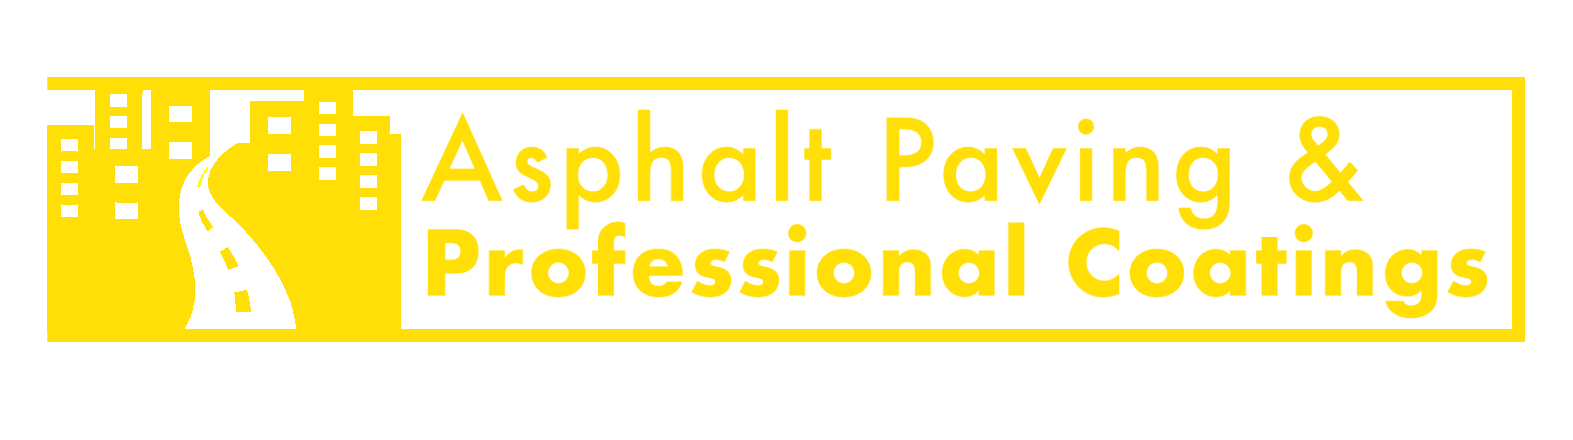 Asphalt Paving & Professional Coatings